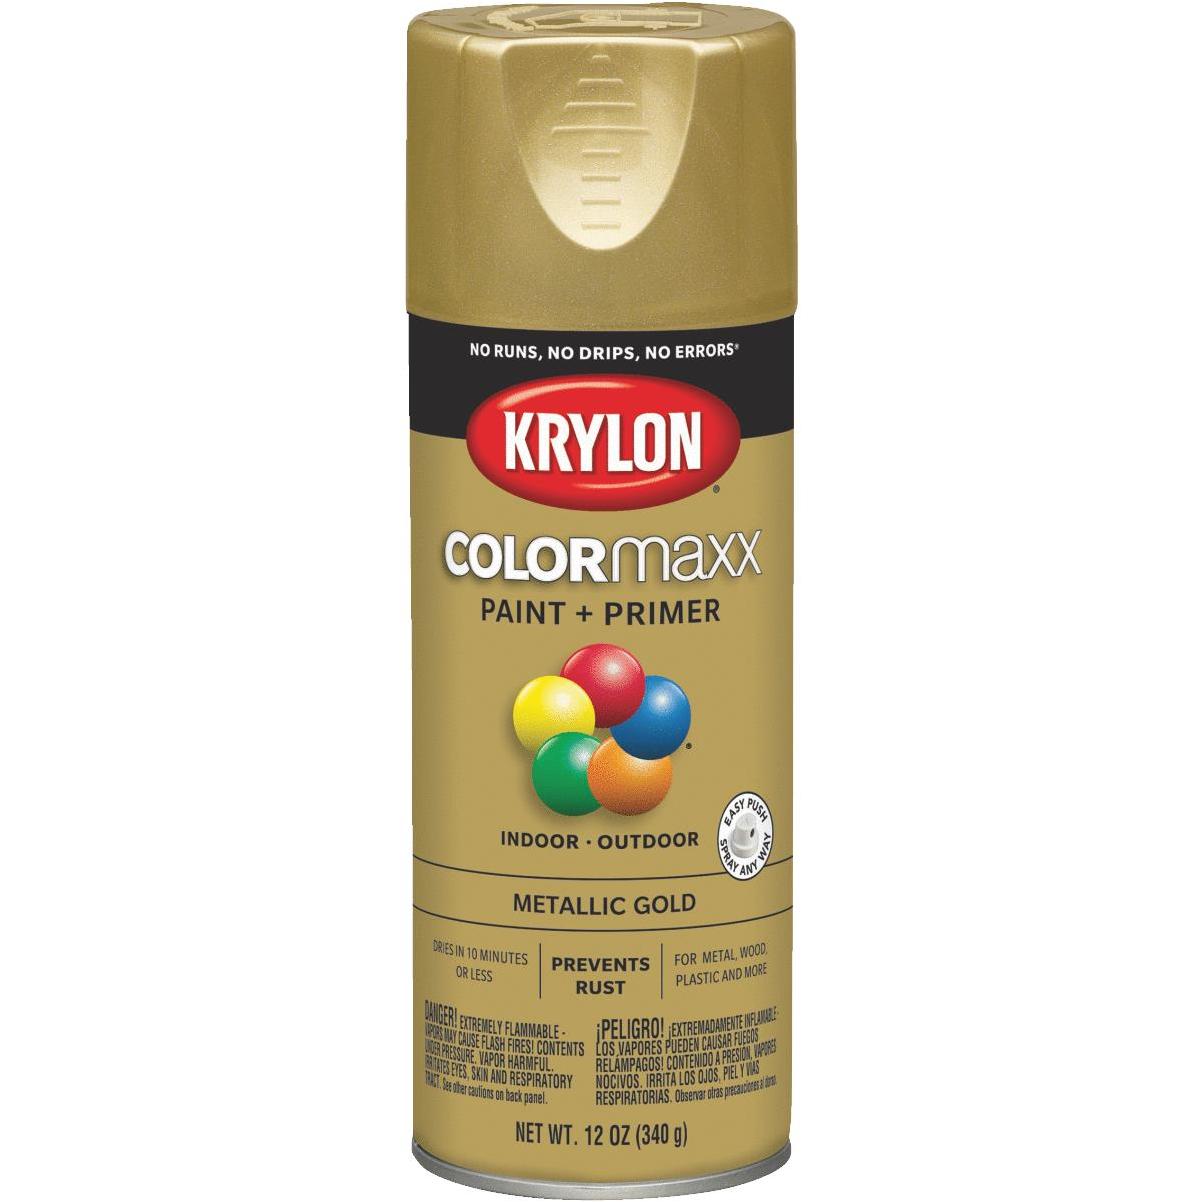 Krylon Metallic Spray Paint, 11 oz., Brass